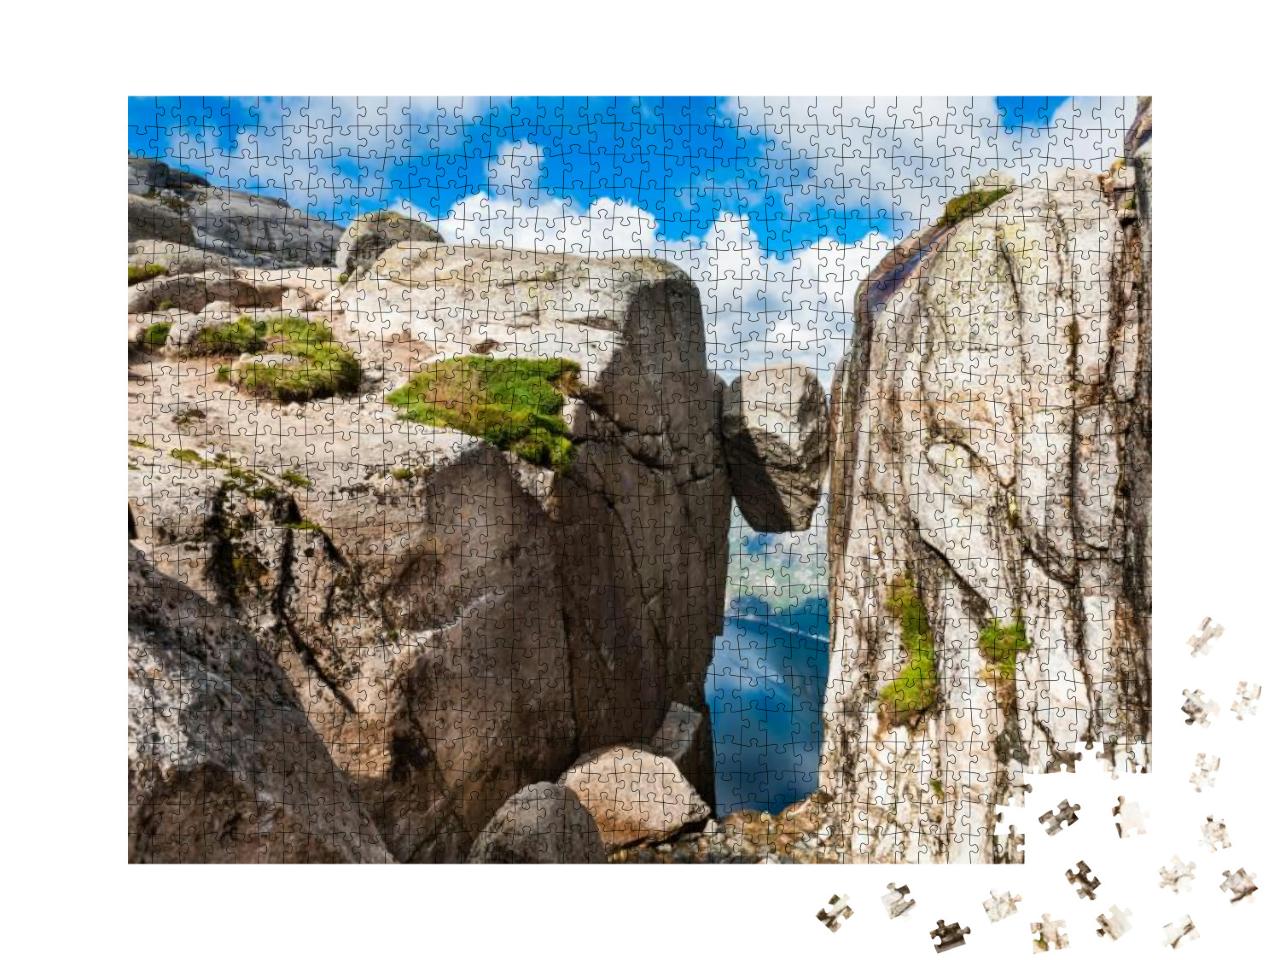 Kjeragbolten - Famous Landmark on Kjerag Mountain, Norway... Jigsaw Puzzle with 1000 pieces